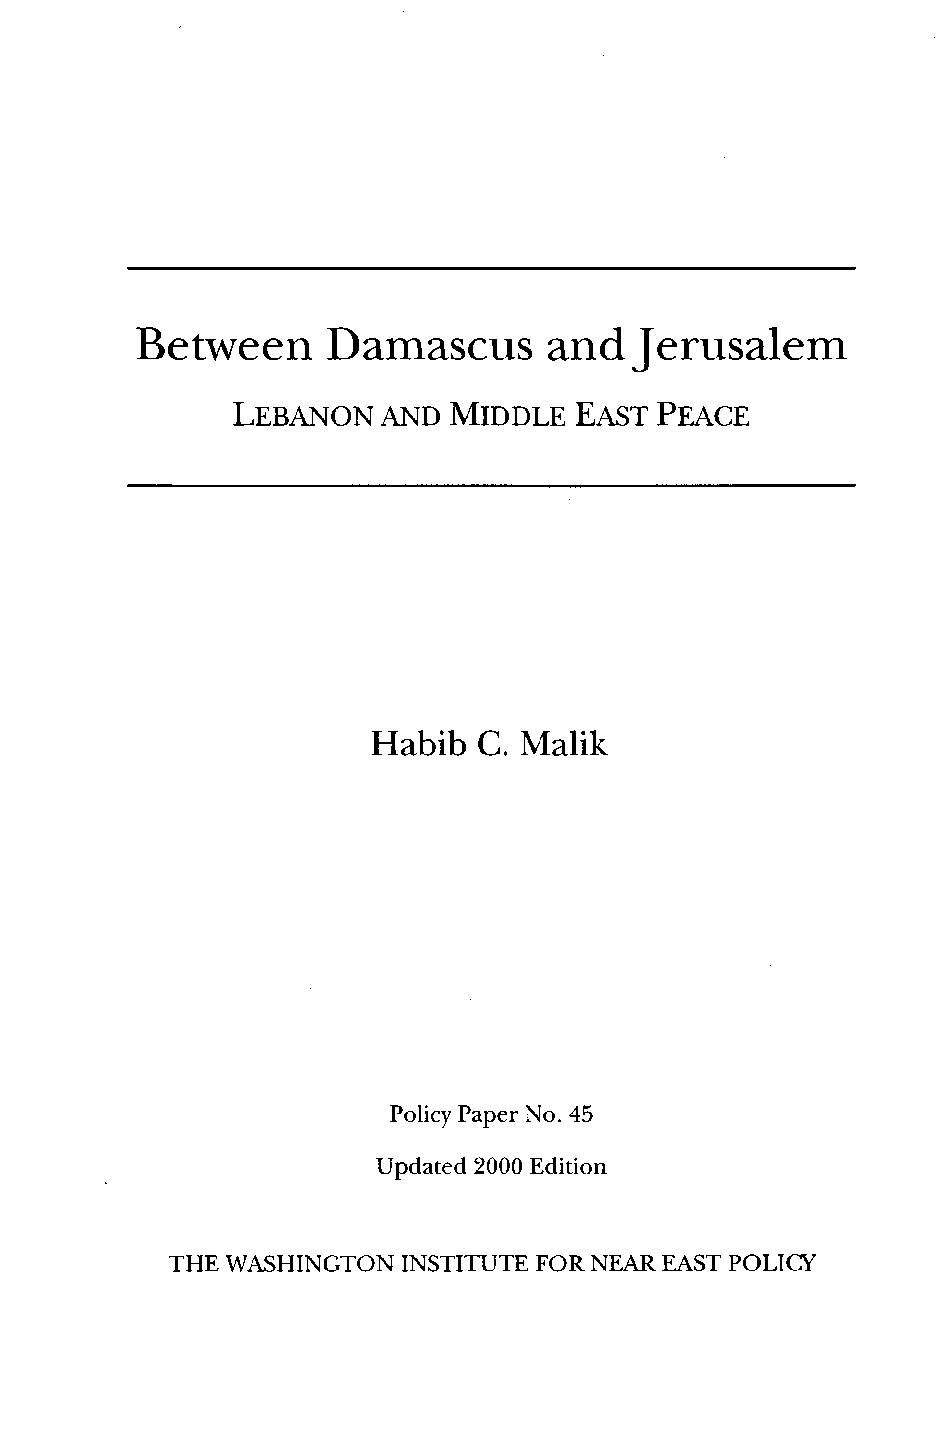 PP_45_BETWEEN_DAMASCUS_AND_JERUSALEM.pdf